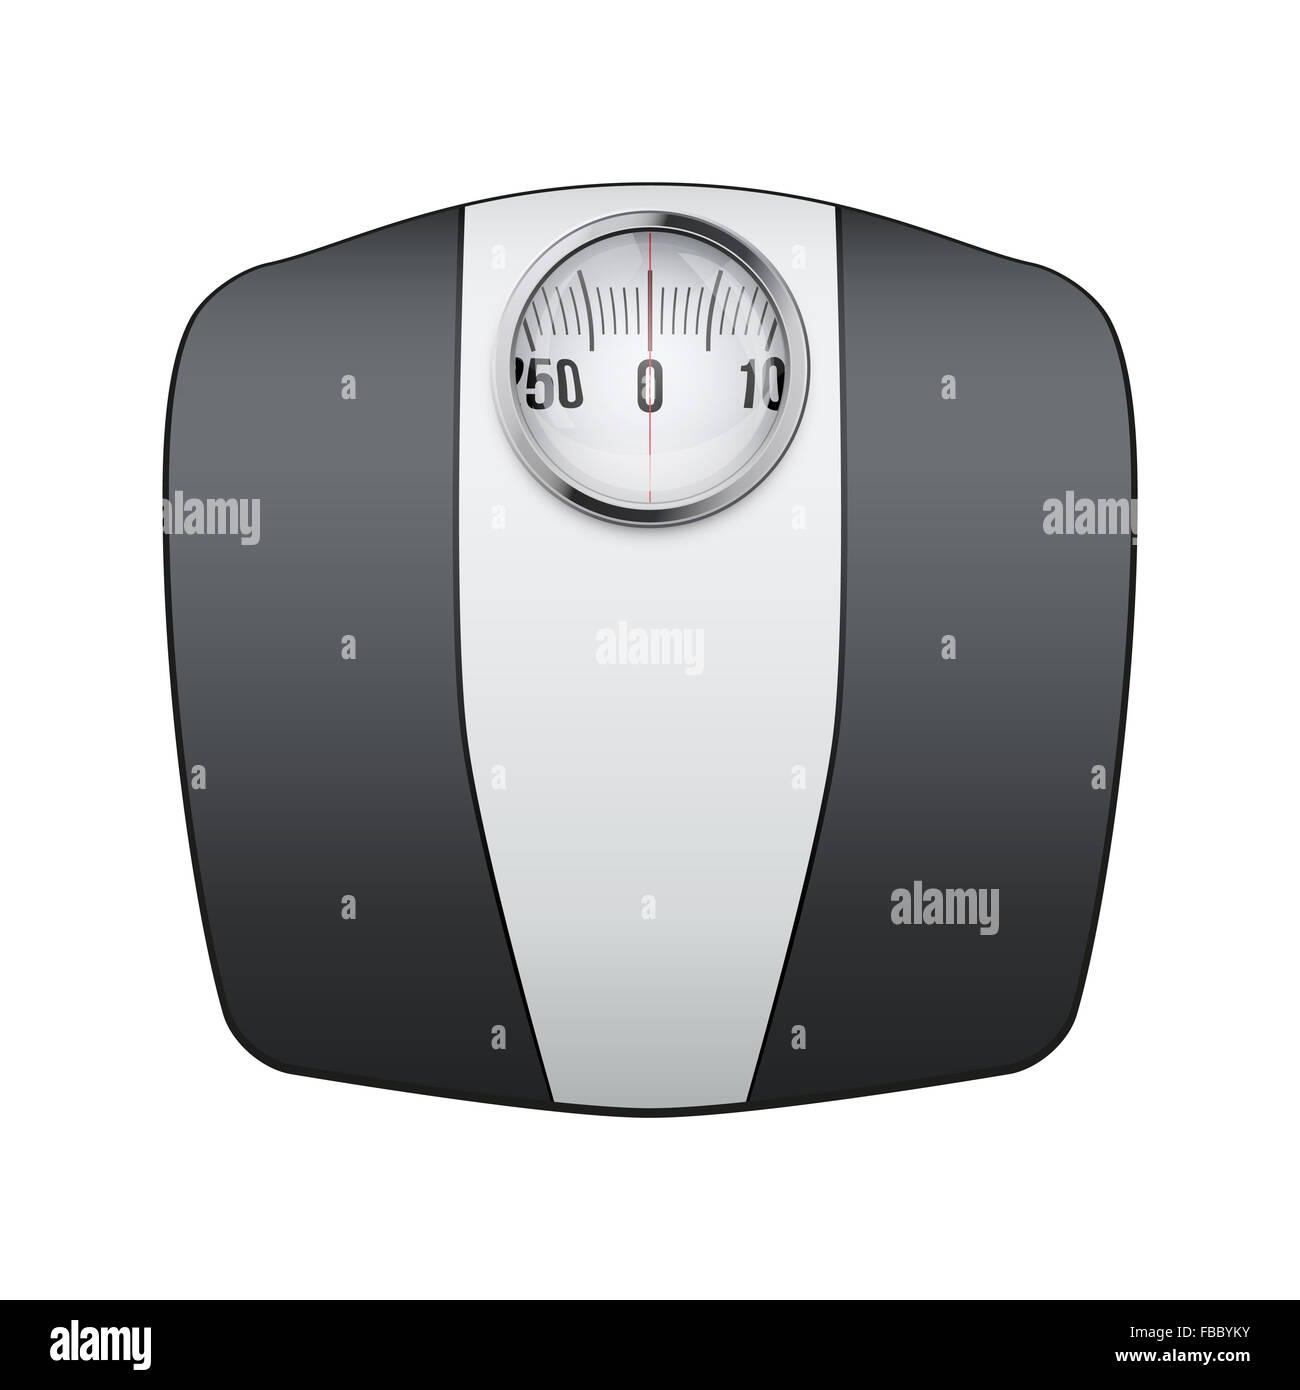 Analog weight scale Stock Photo by ©billiondigital 118559304